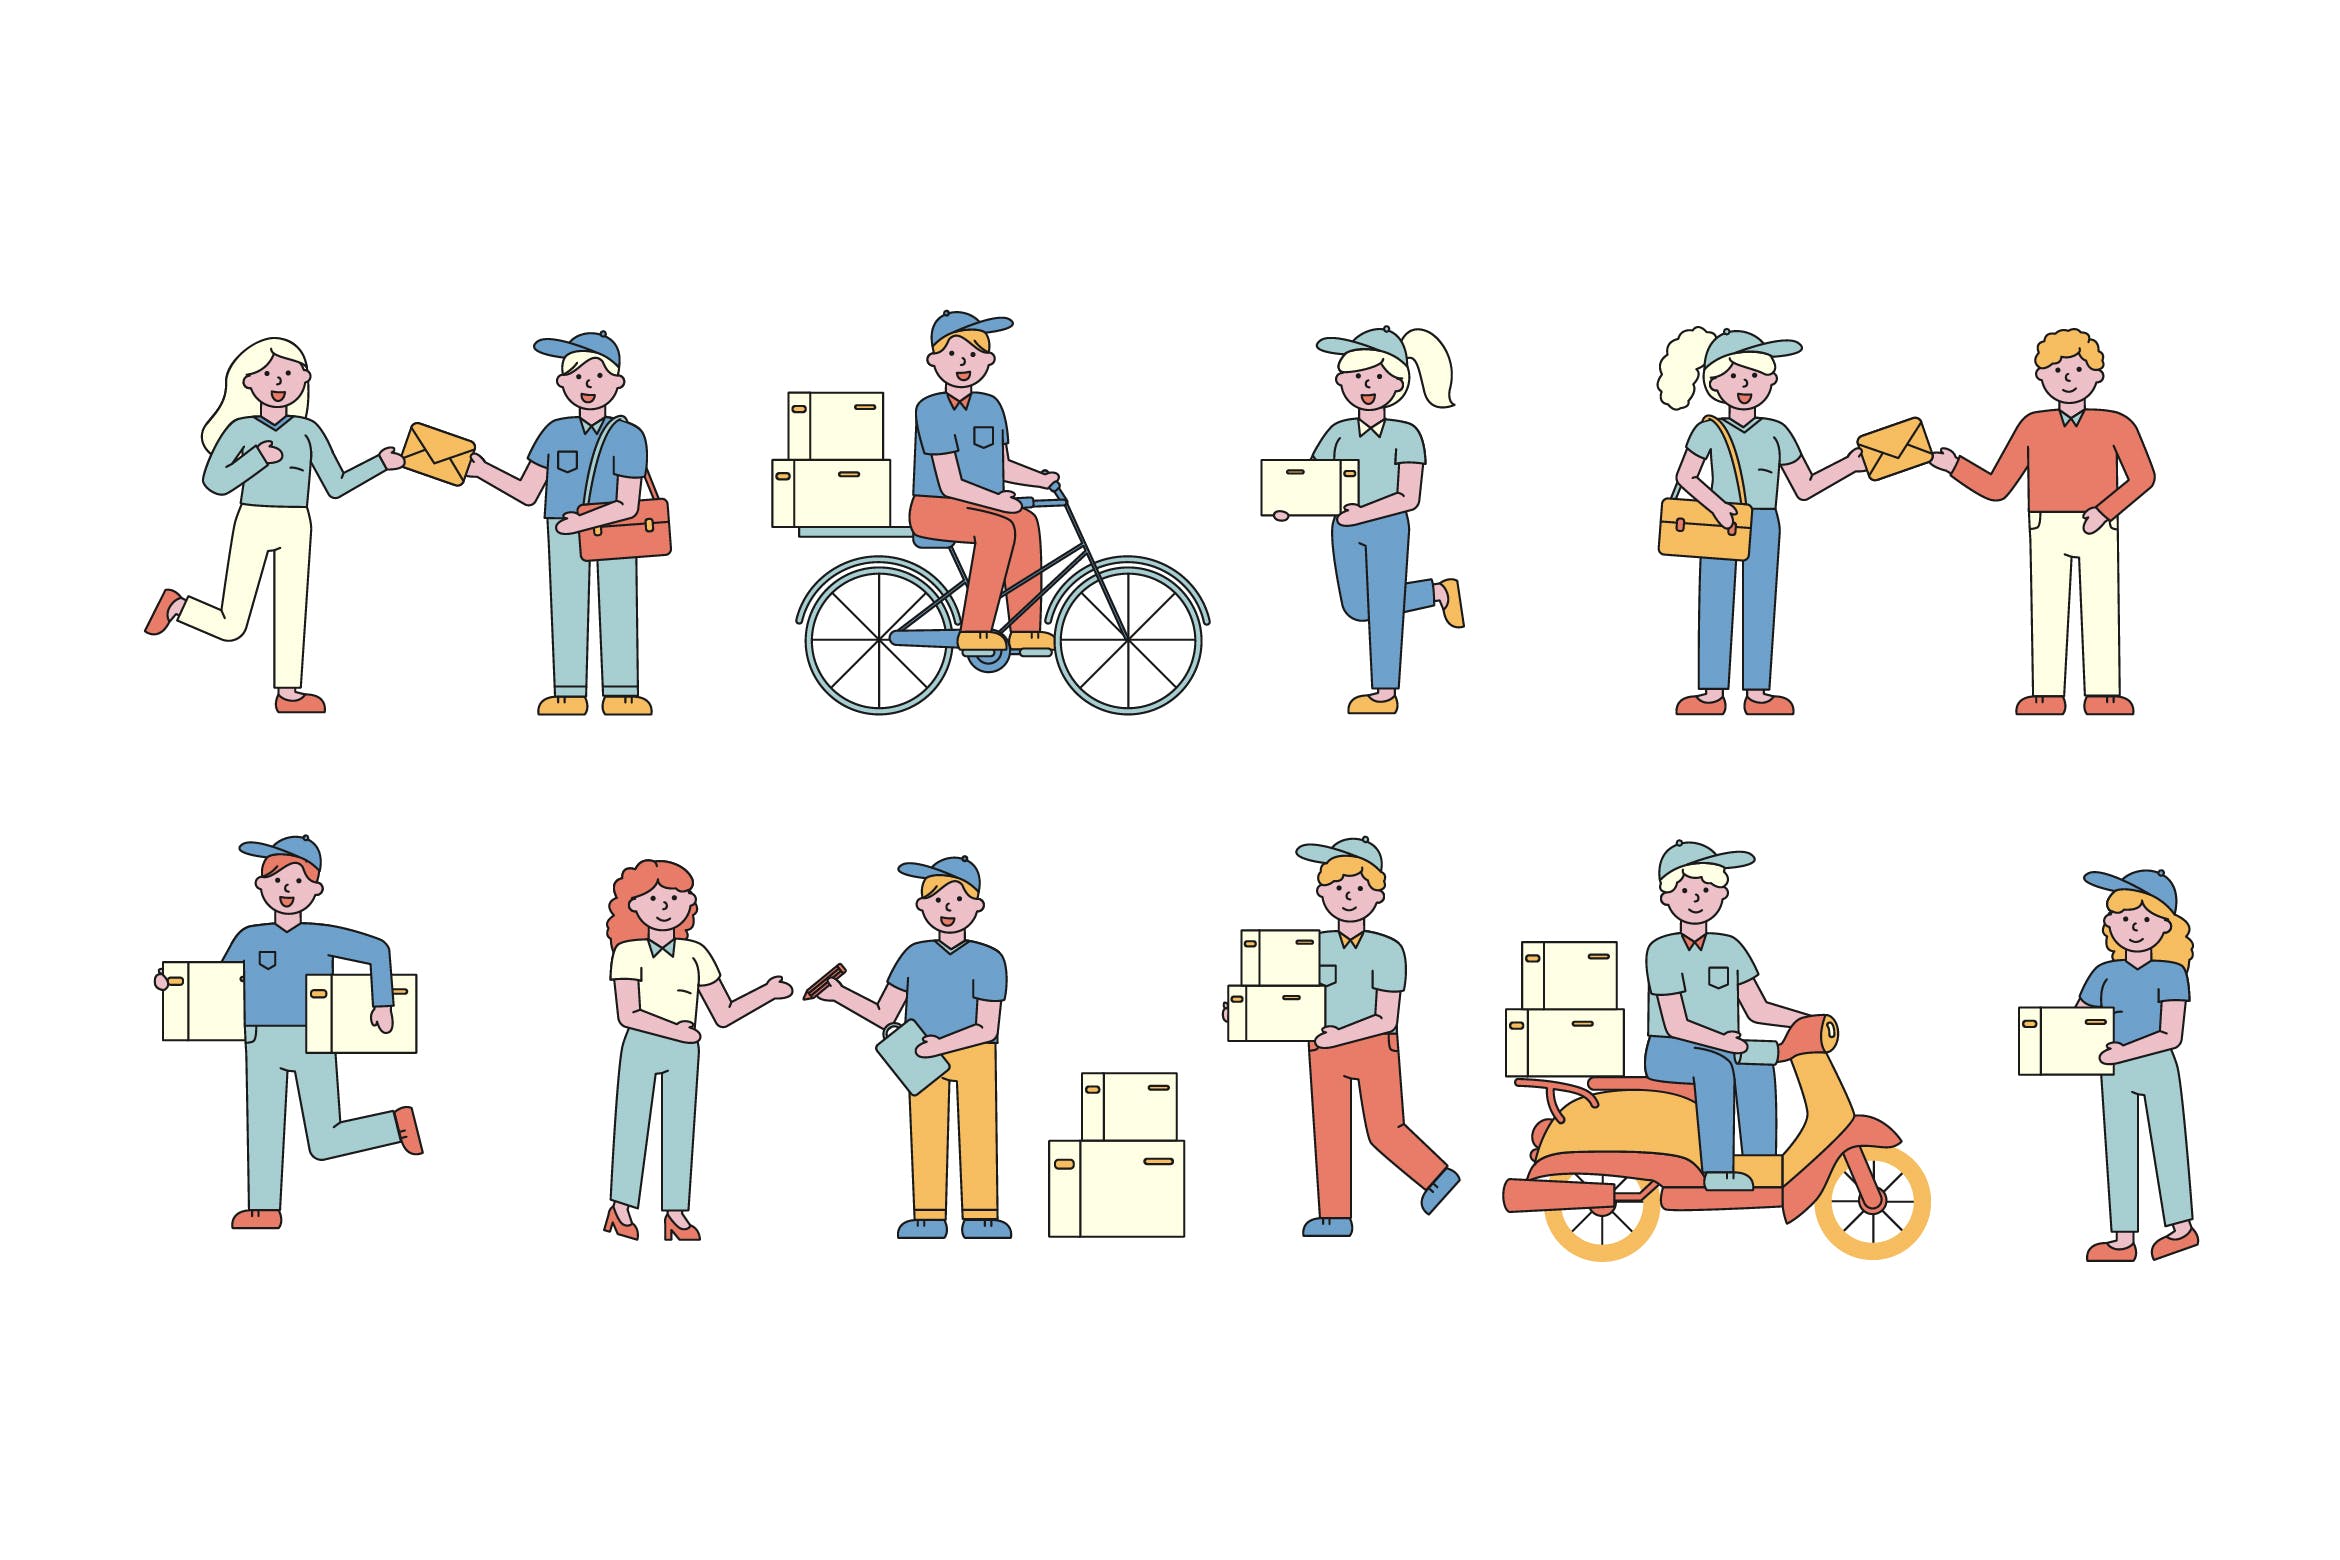 送药上门人物形象线条艺术矢量插画16设计网精选素材 Mail delivery Lineart People Character Collection插图